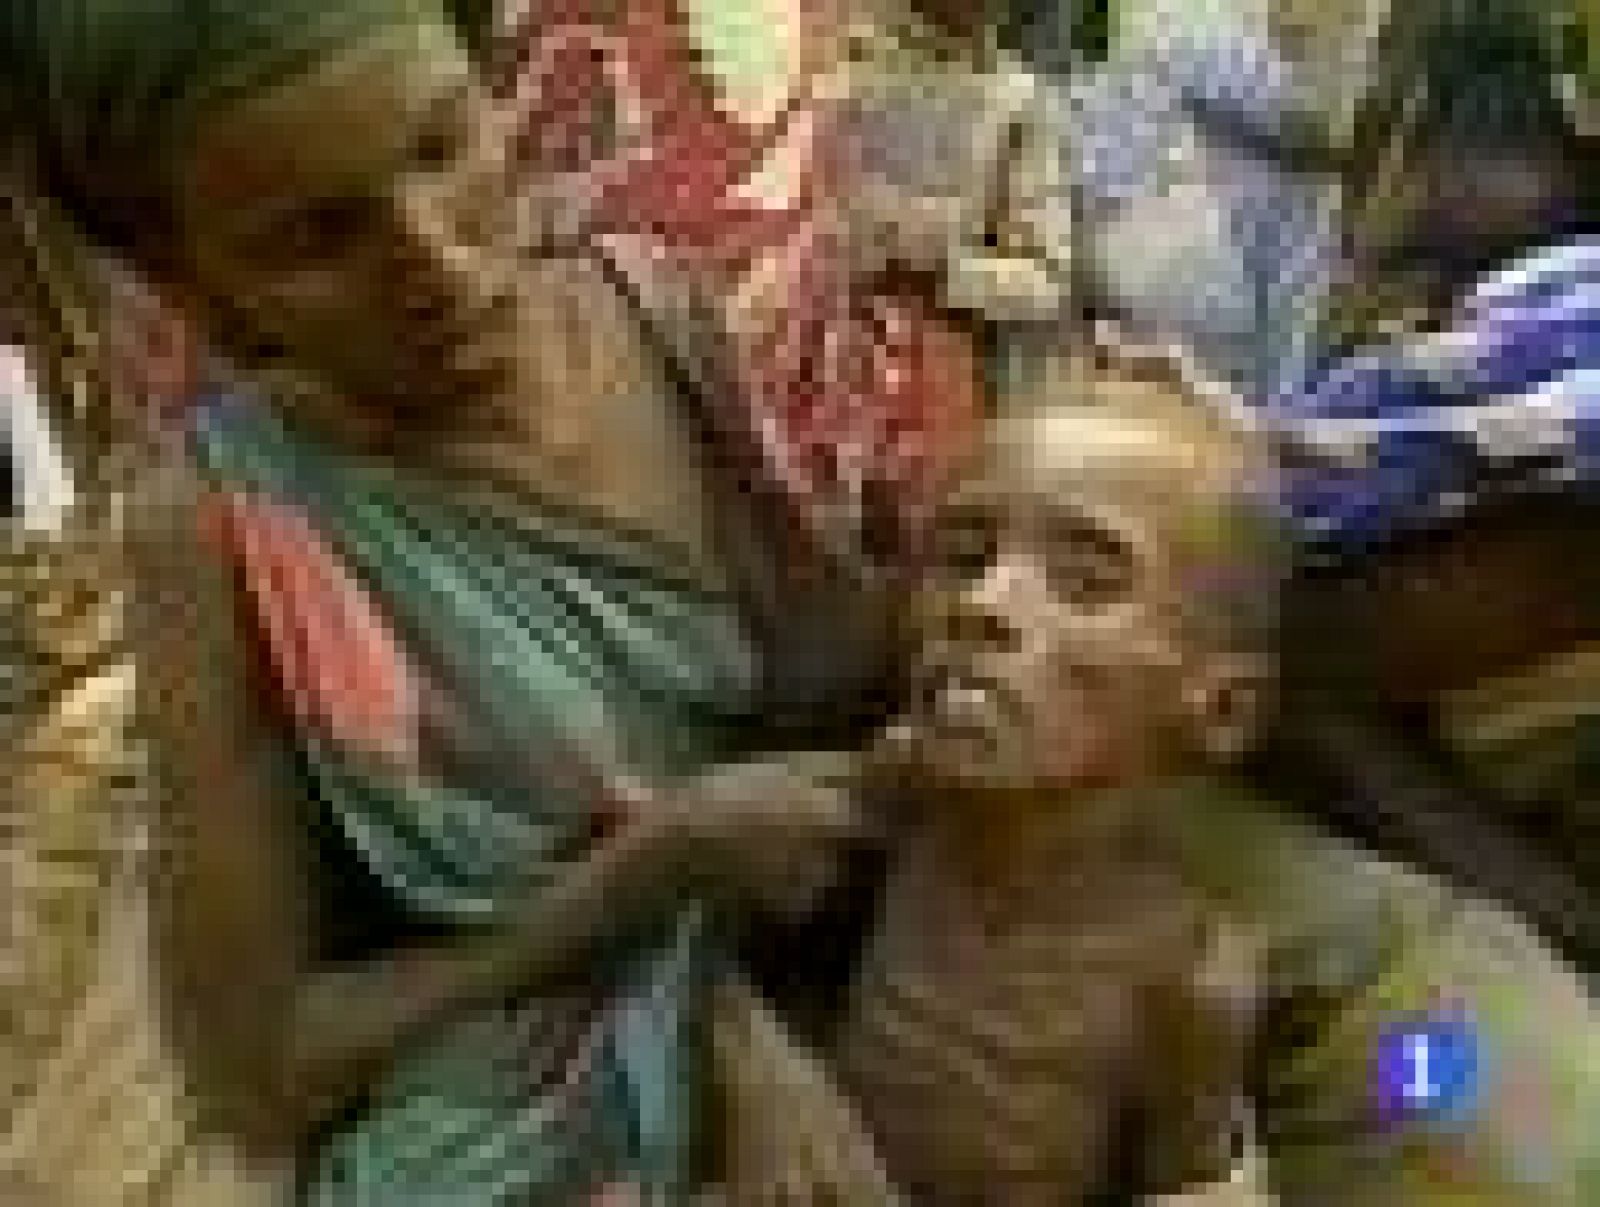 Telediario 1: La hambruna seguirá expandiéndose en Somalia, según la ONU | RTVE Play